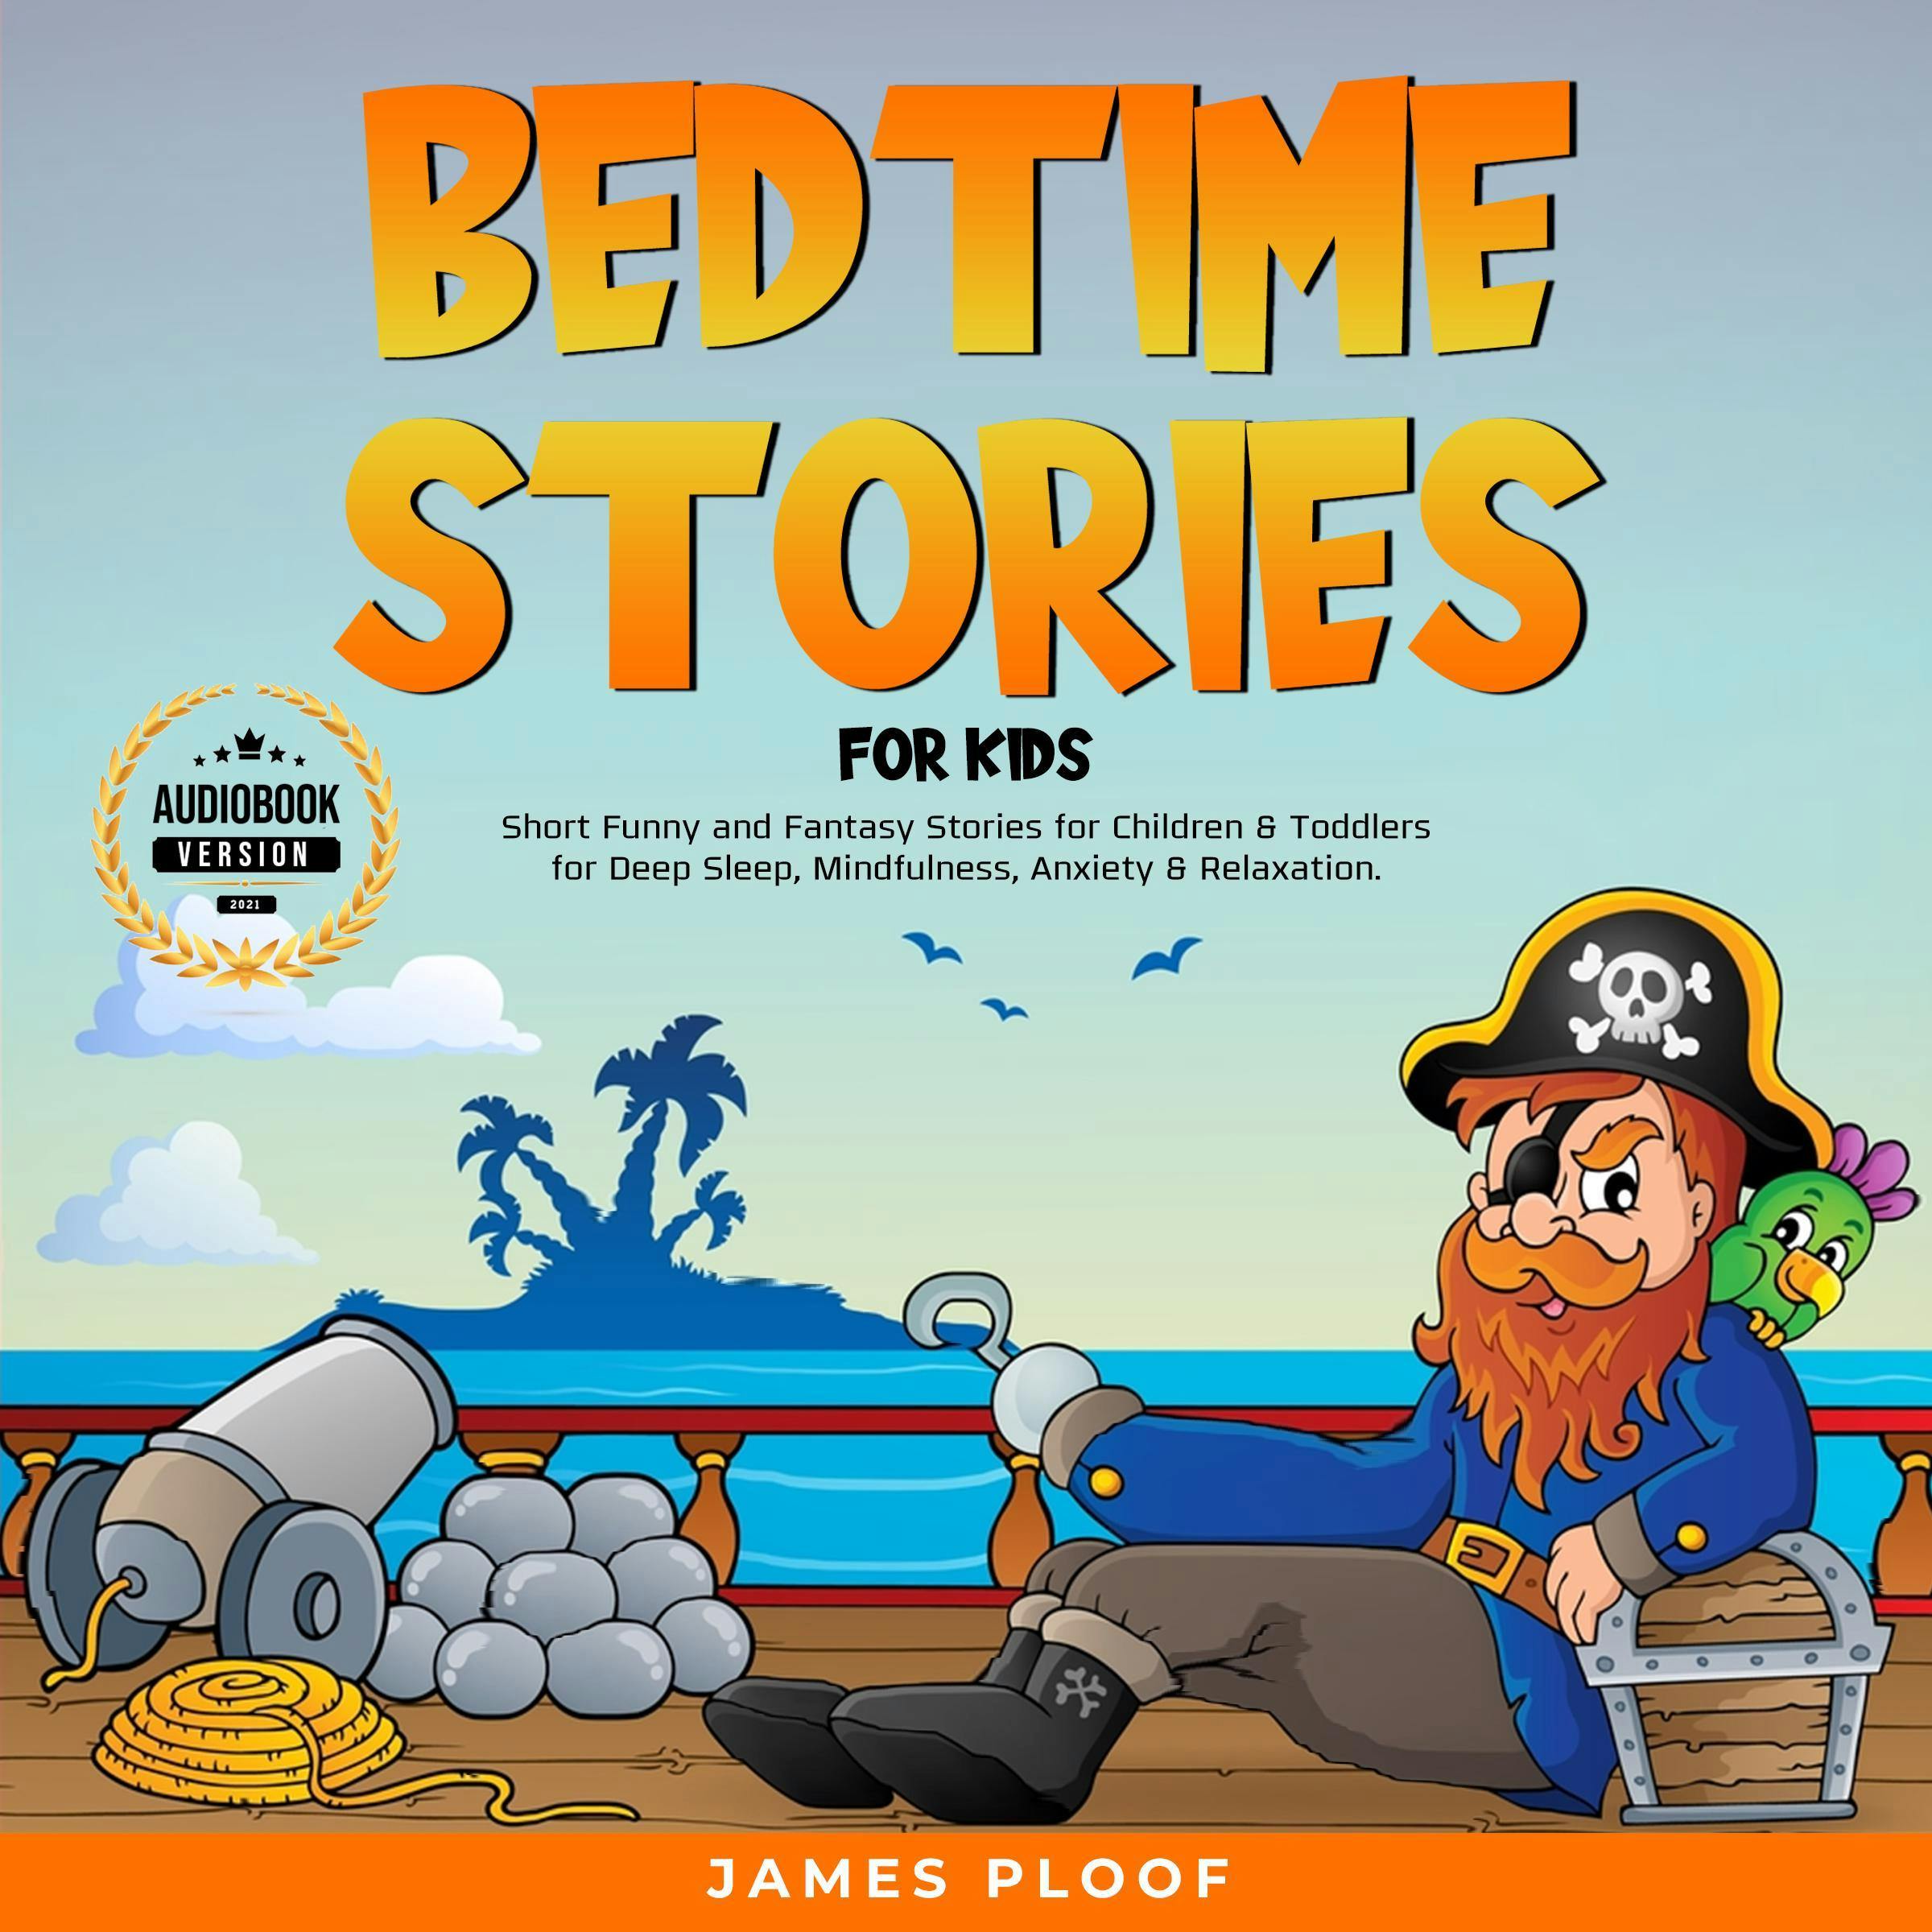 Bedtime Stories for Kids - James Ploof